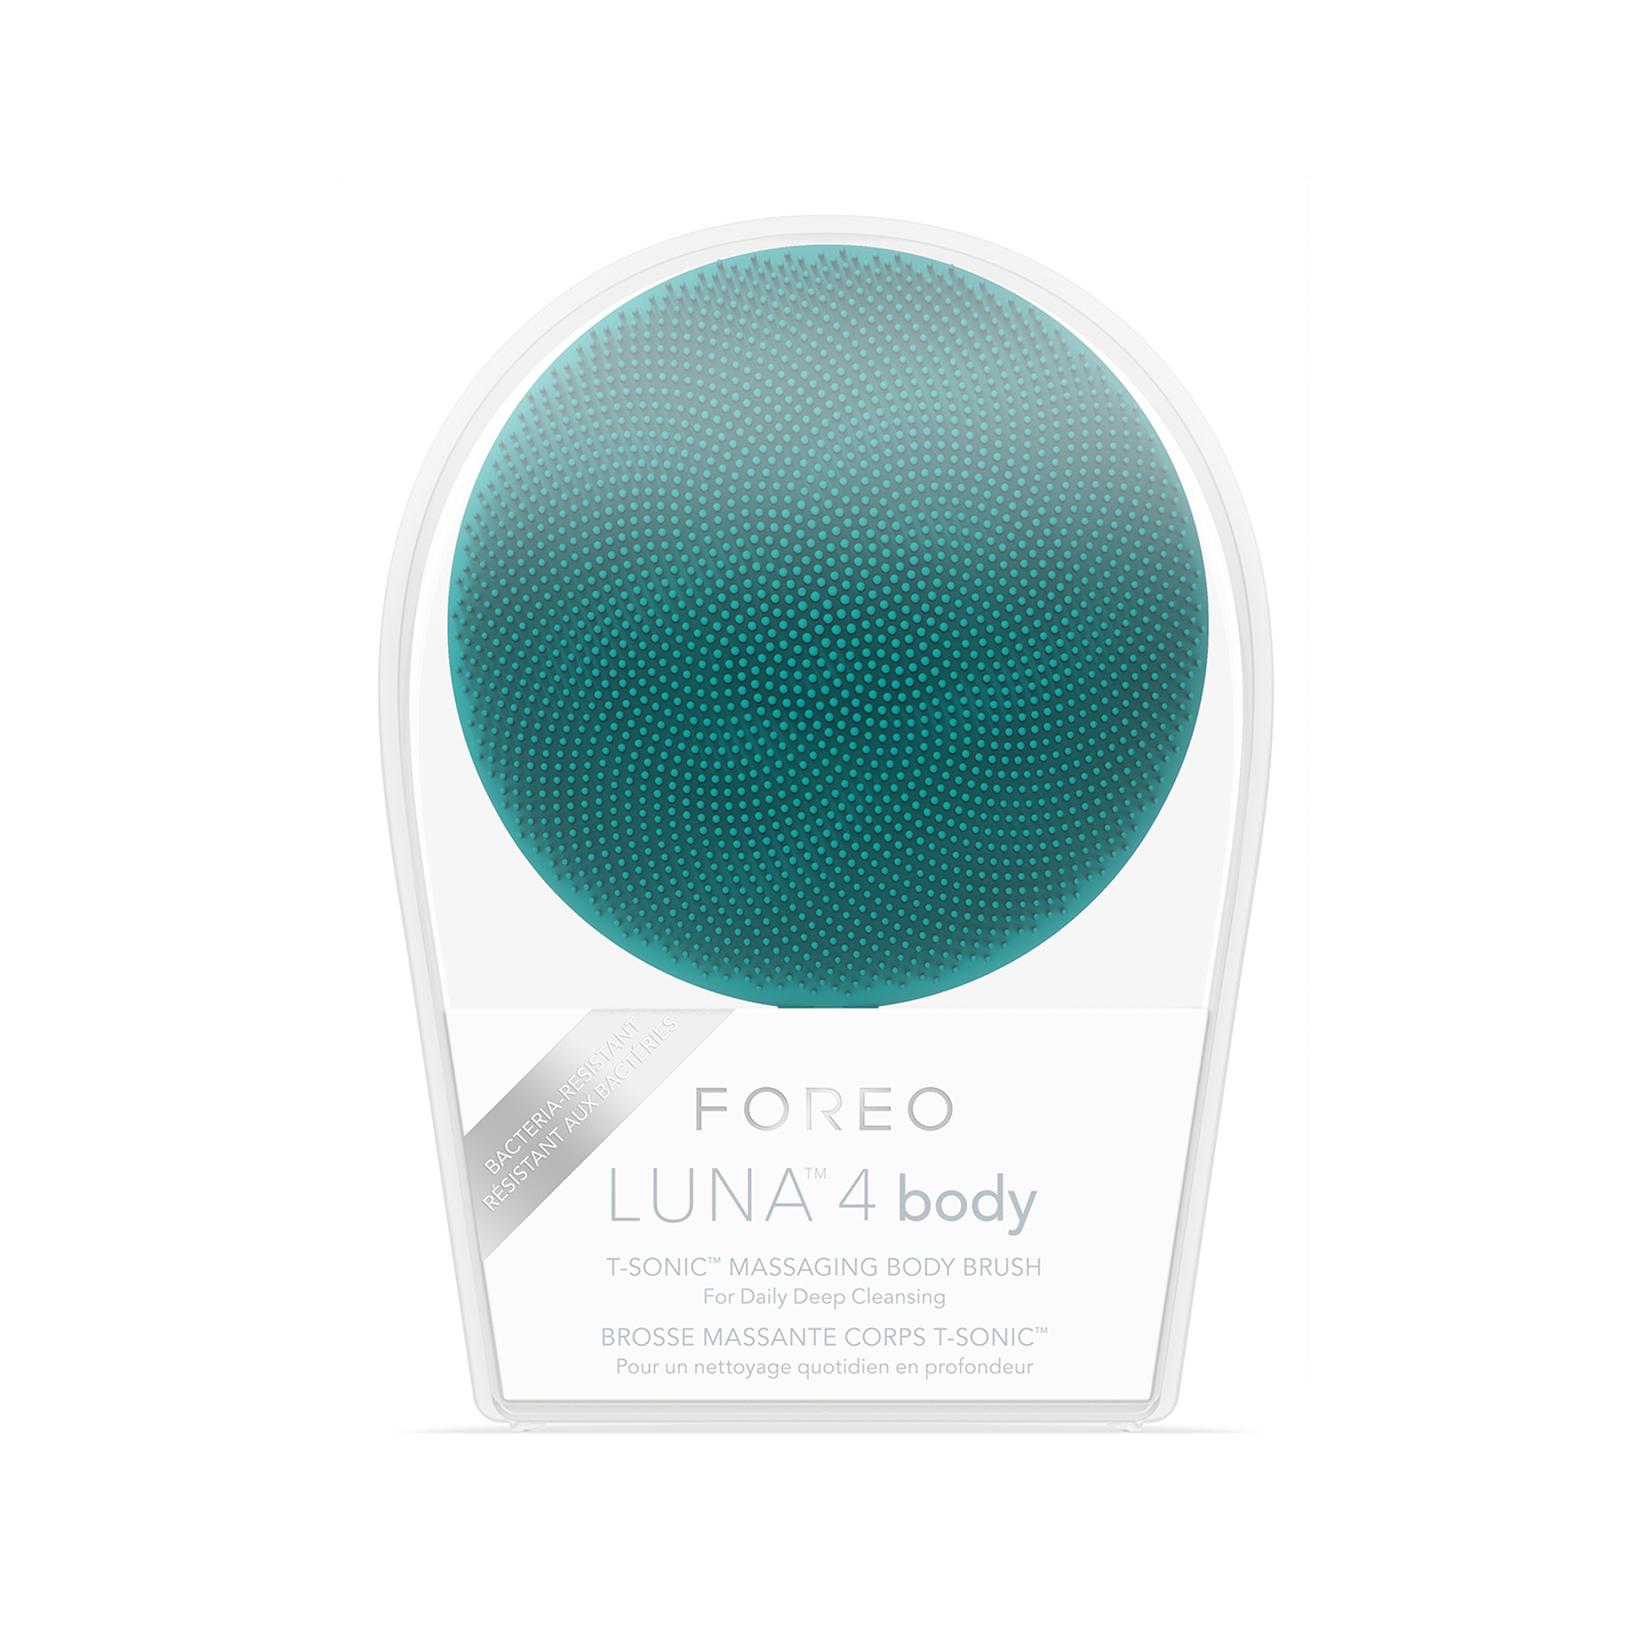 Selected image for FOREO LUNA 4 Body Evergreen Pametni sonični uređaj i masažer za čišćenje tela